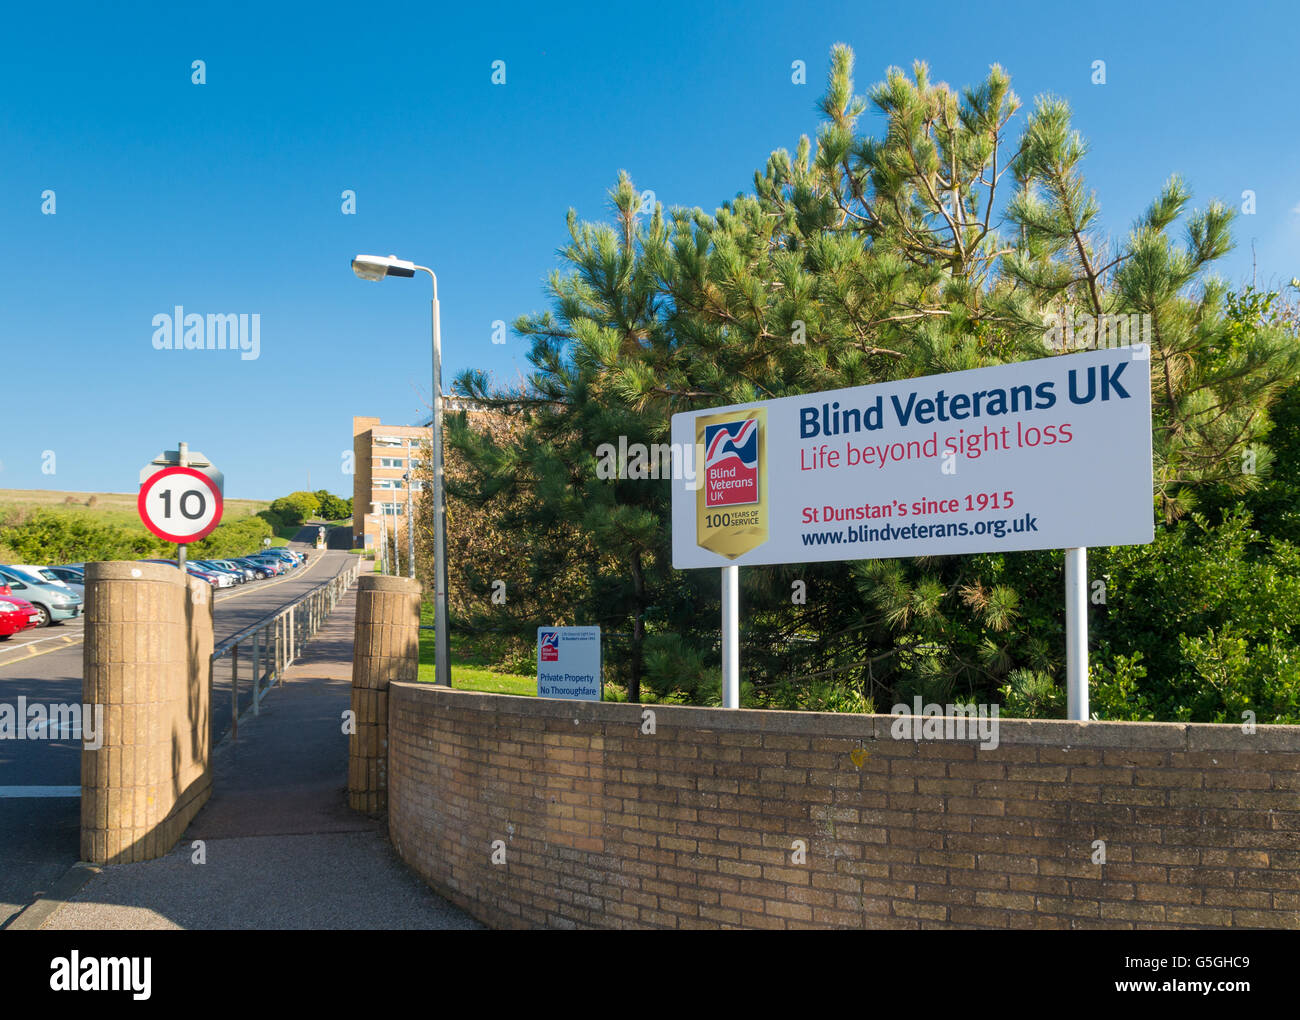 BRIGHTON, UK - OCTOBER 20, 2015: Blind veterans UK training, convalescent, care and holiday centre in Ovingdean, Brighton, opene Stock Photo